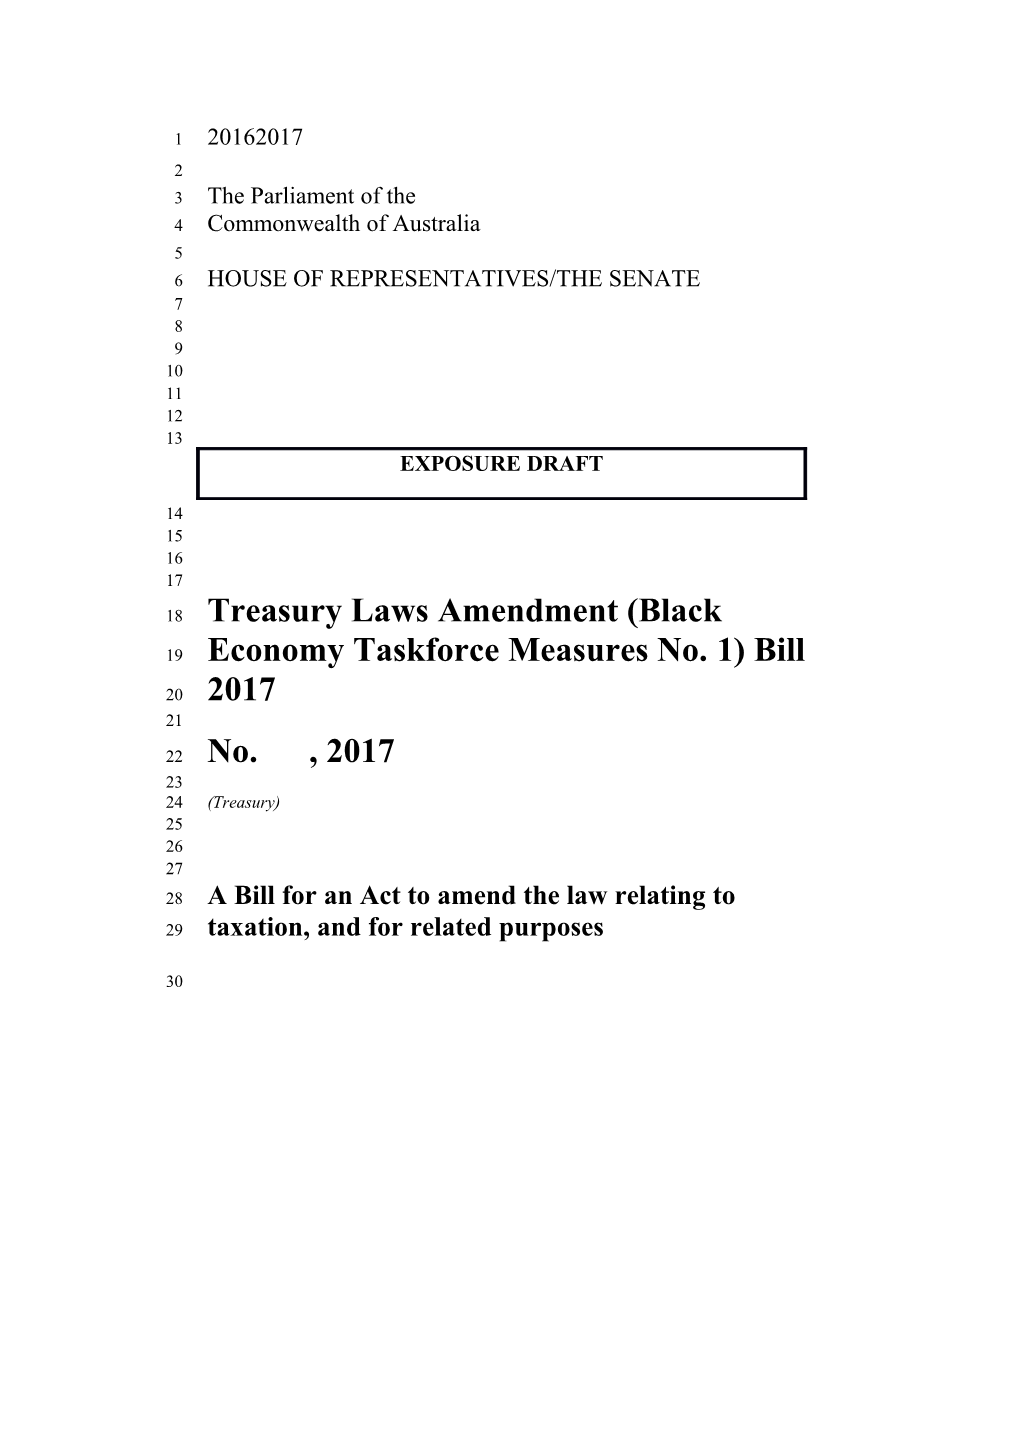 Treasury Laws Amendment (Black Economy Taskforce Measures No. 1) Bill 2017